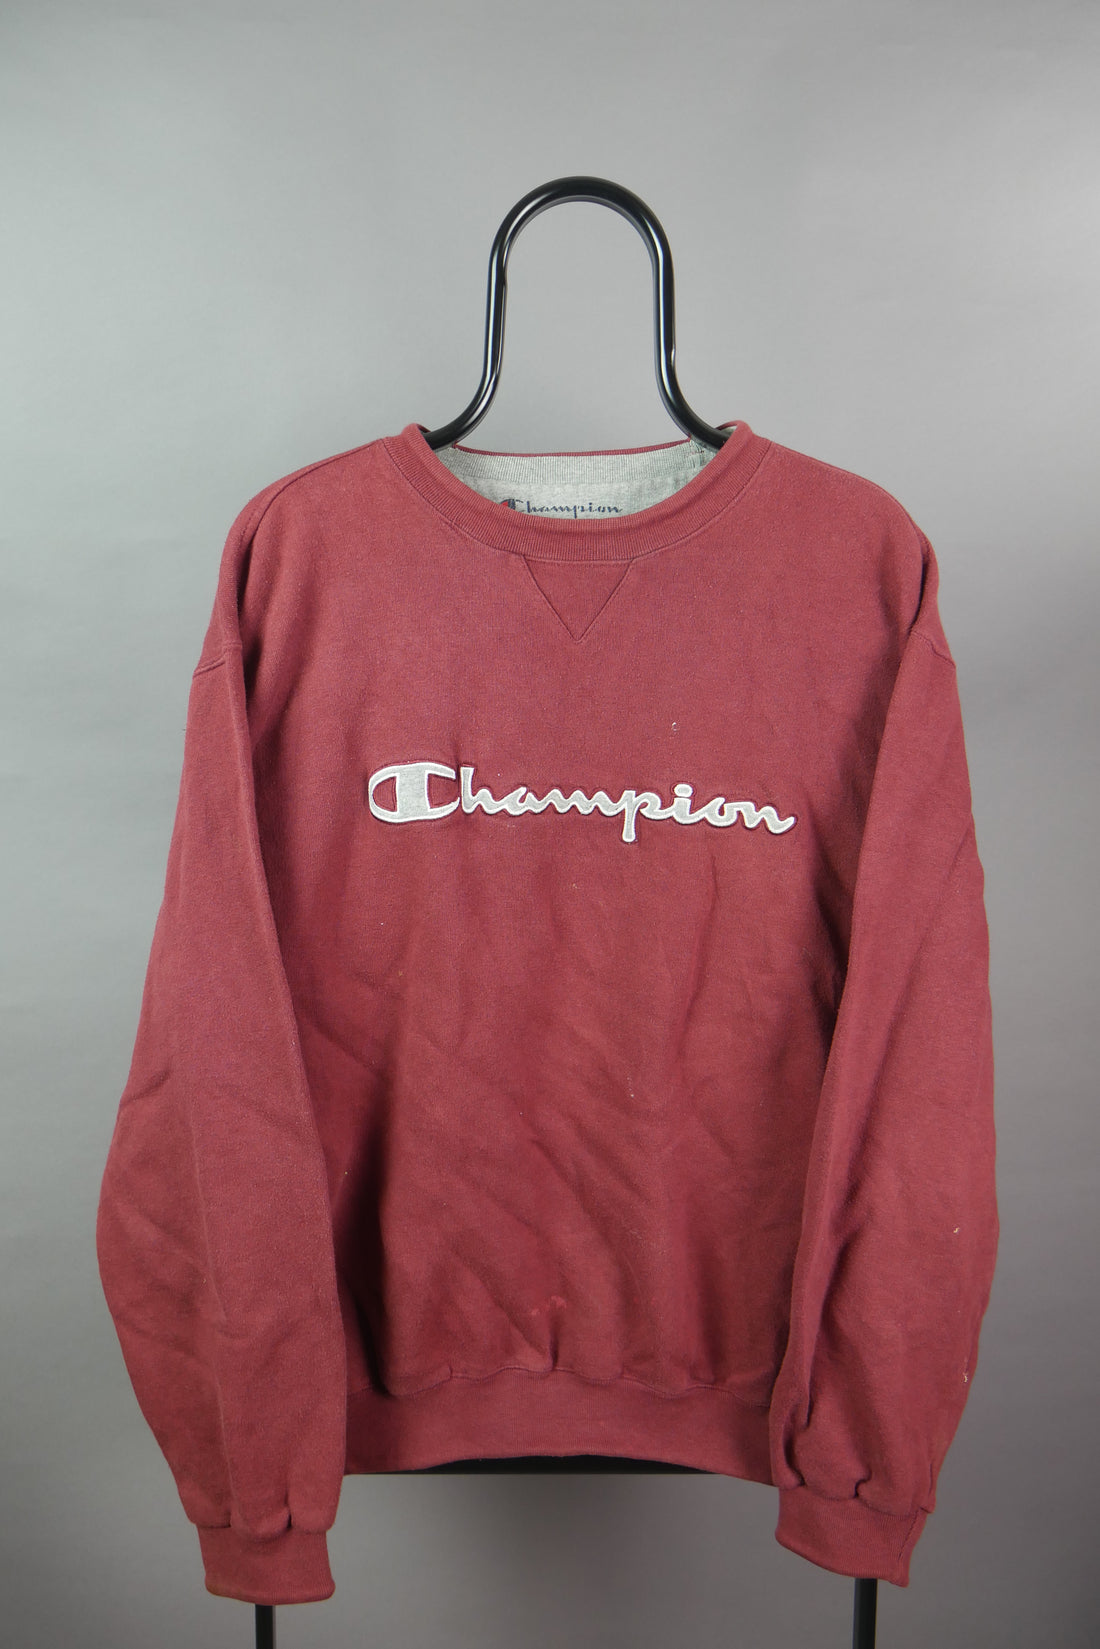 The Vintage Embroidered Champion Sweatshirt (L)